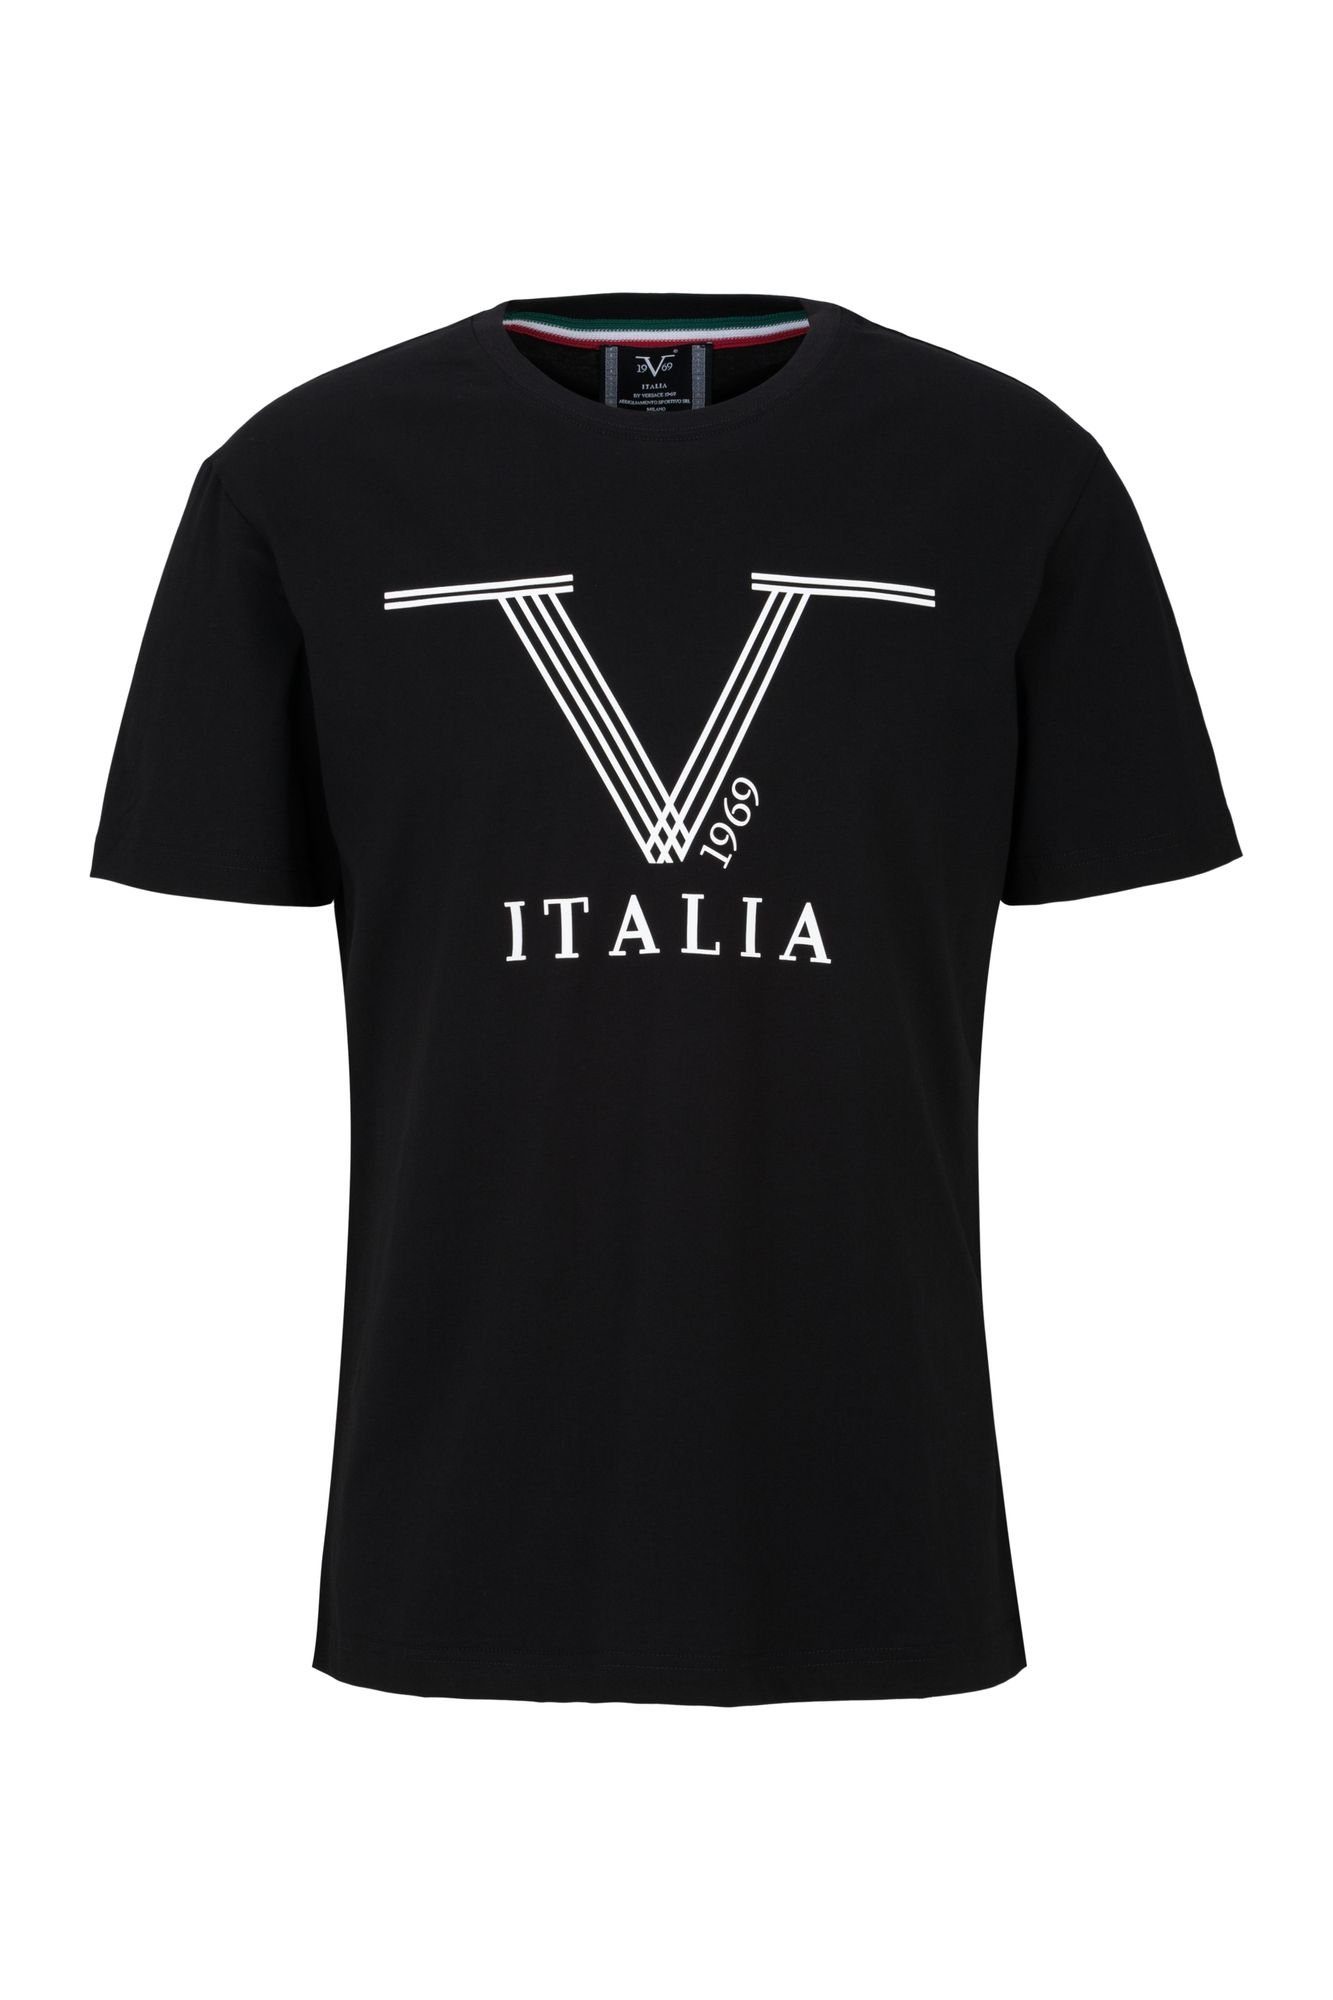 Pierre - by Sportivo SRL 19V69 Versace T-Shirt BLACK Italia by Versace